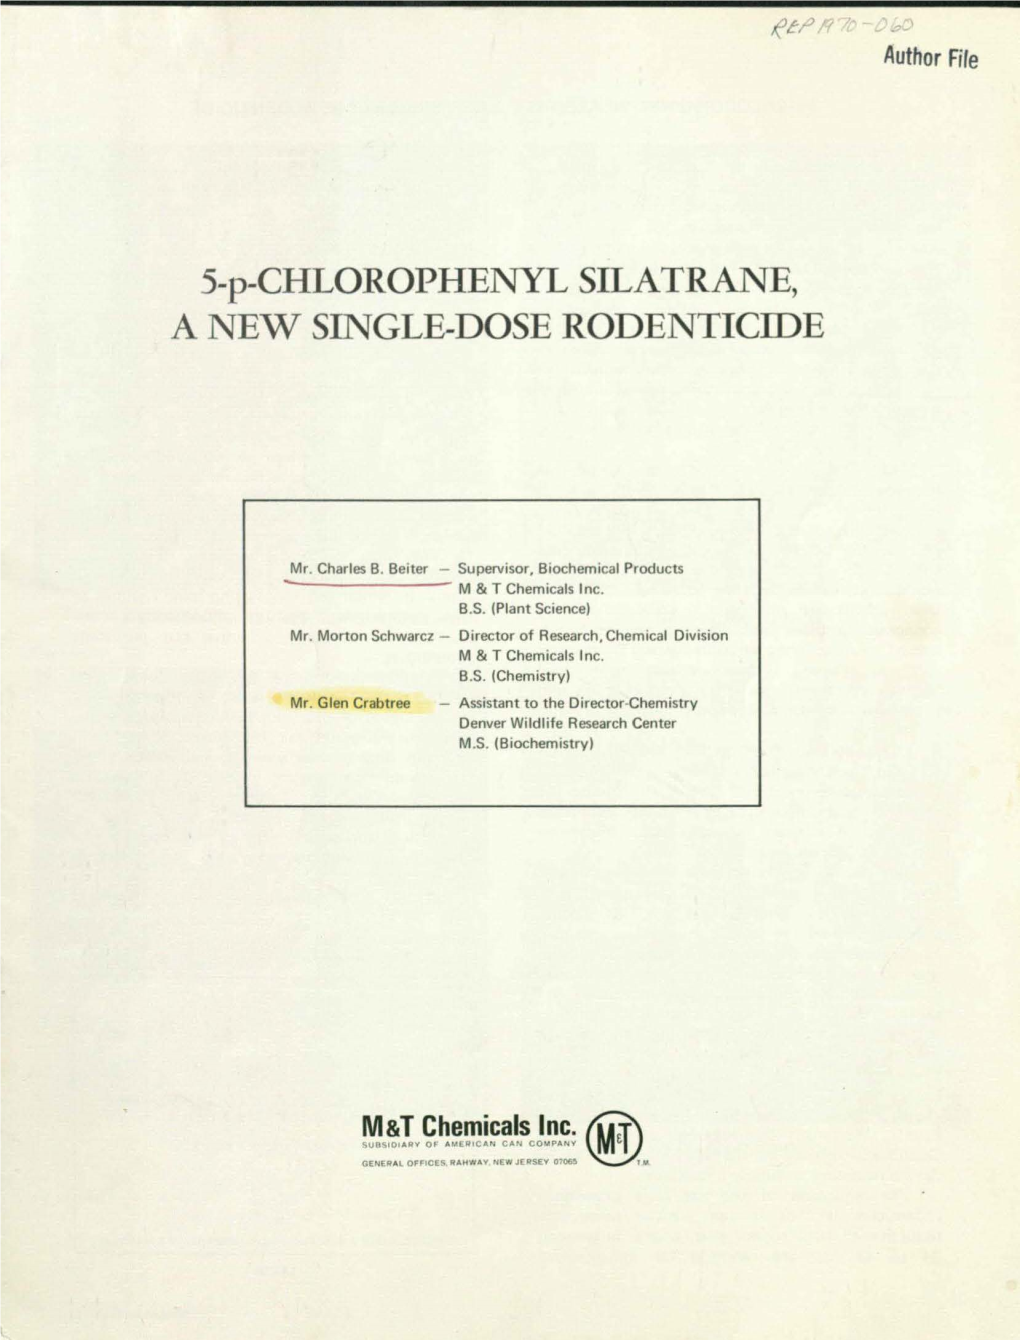 5-P-CHLOROPHENYL SILATRANE, a NEW SINGLE-DOSE RODENTICIDE